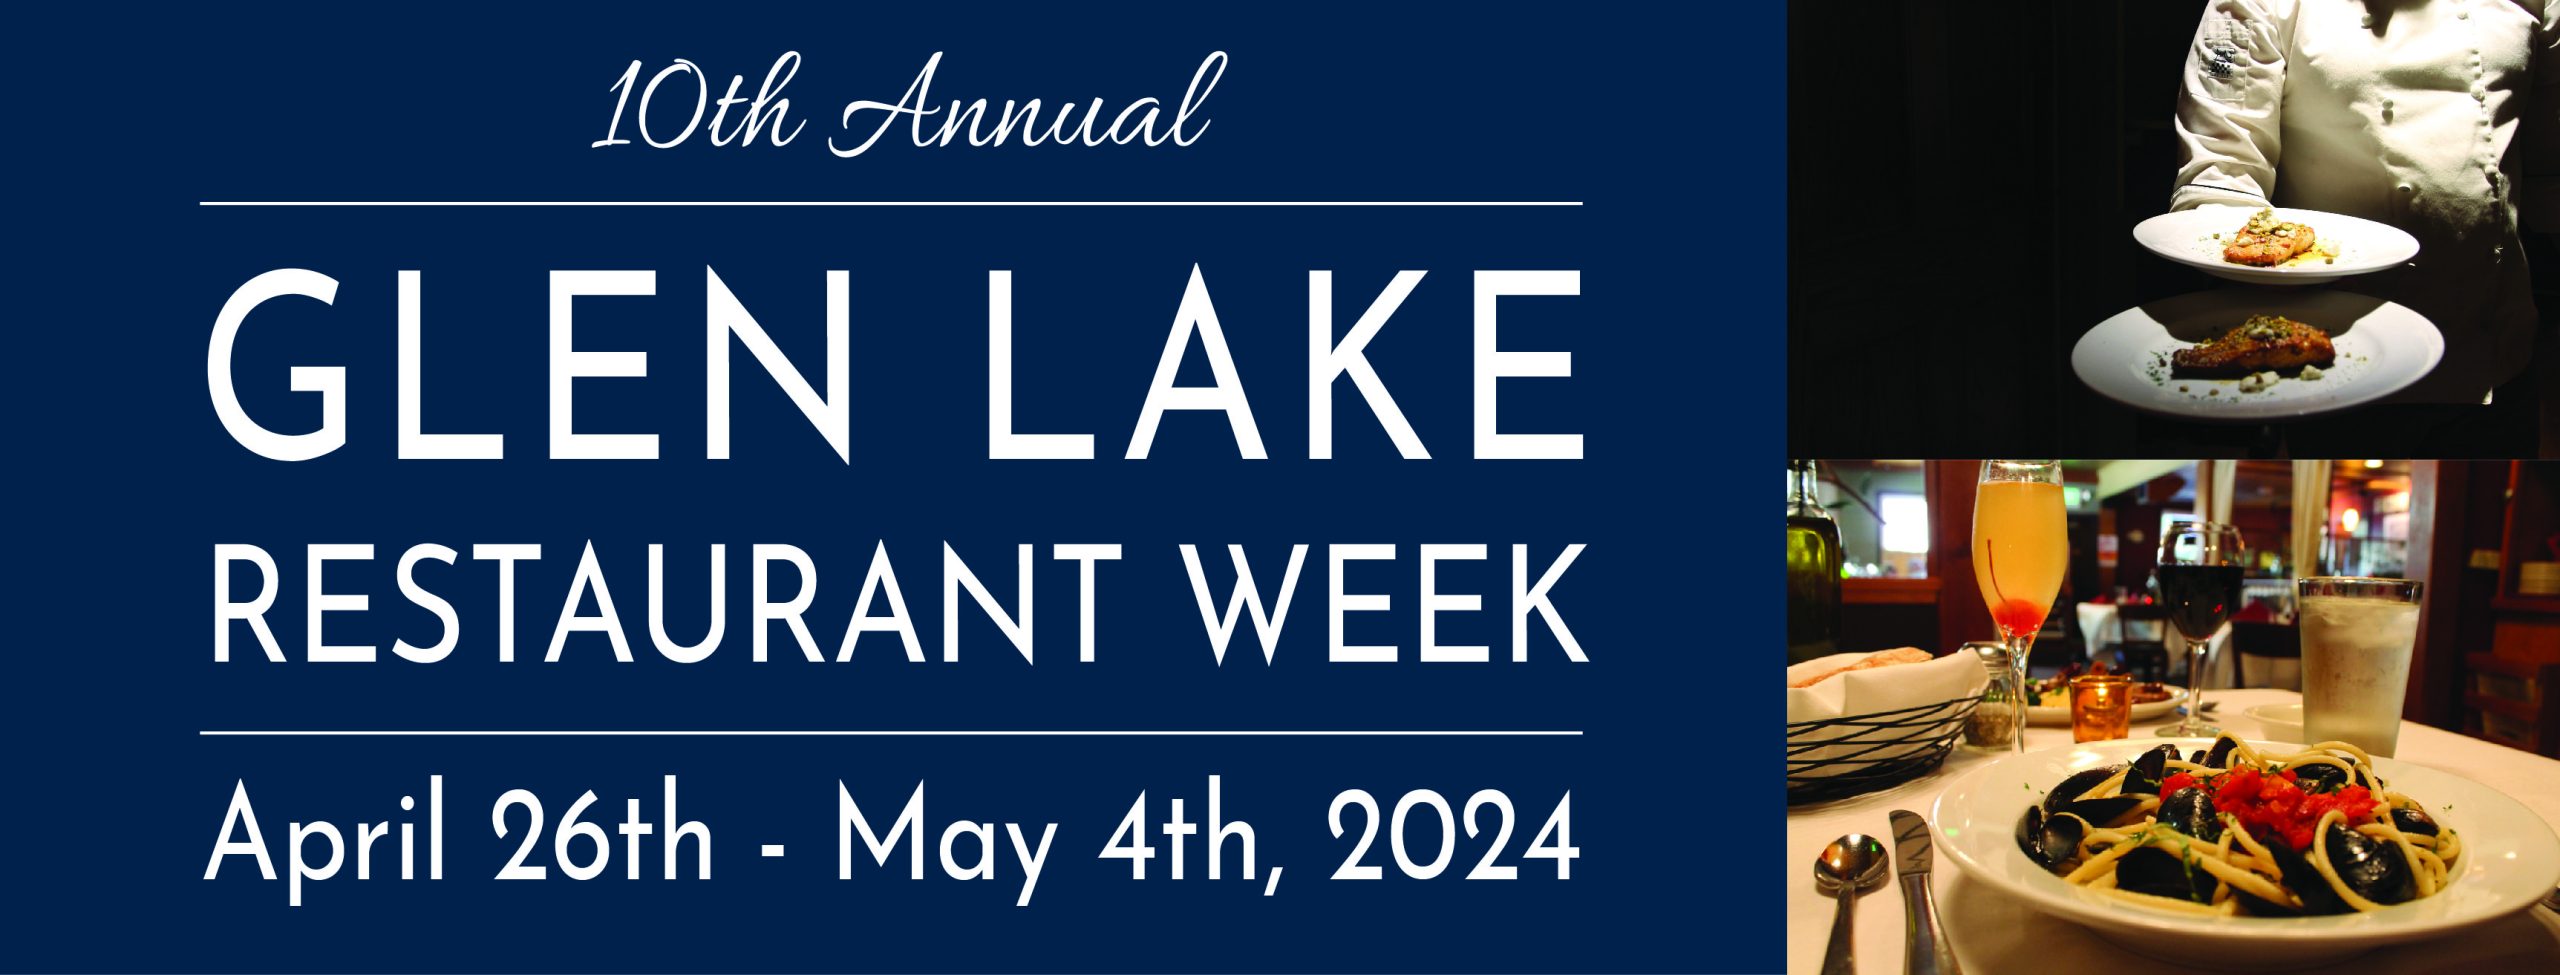 event graphic glen lake restaurant week - 10th annual design